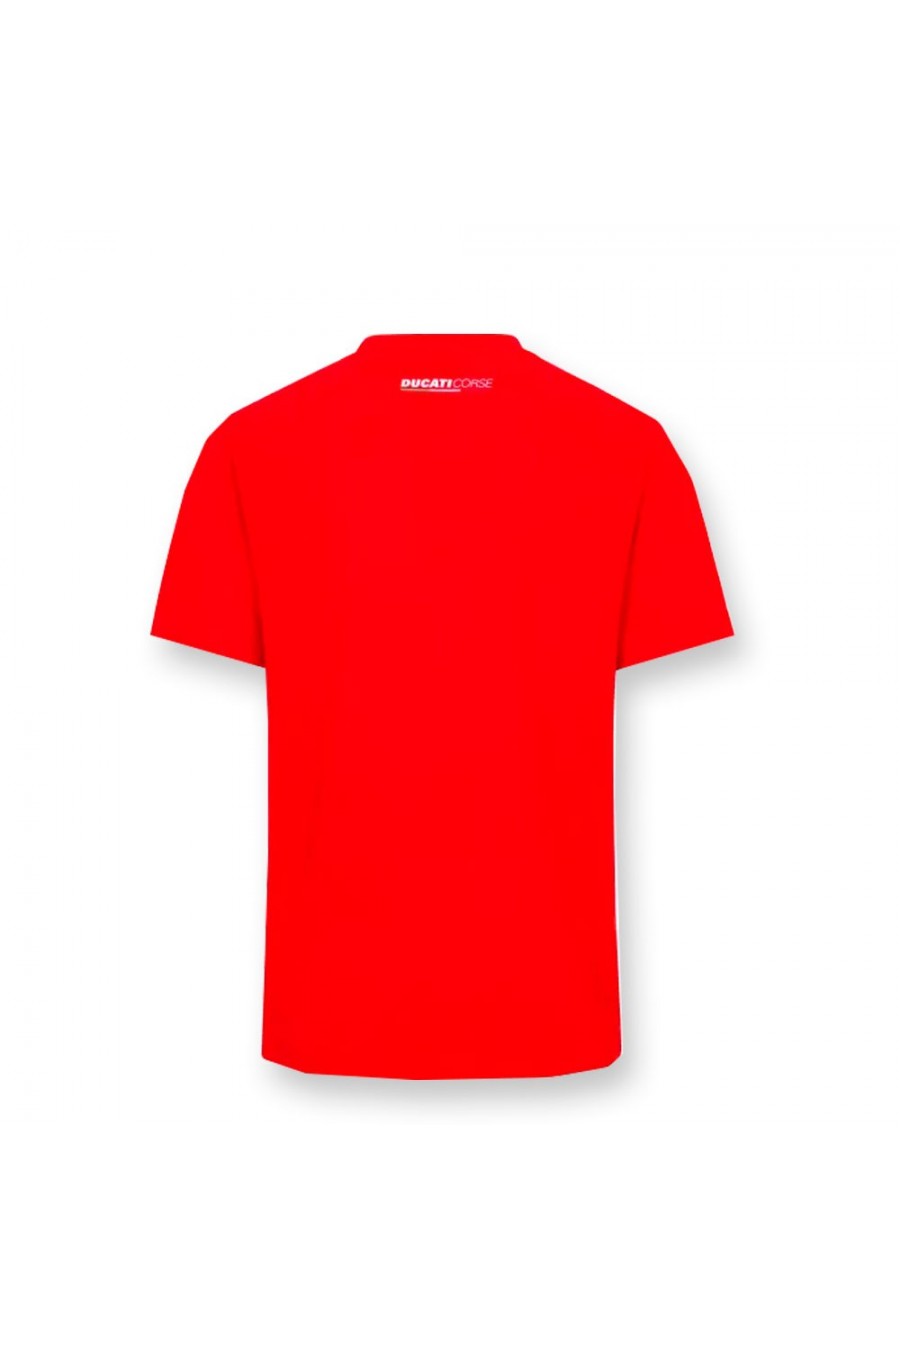 T-shirt Ducati Corse